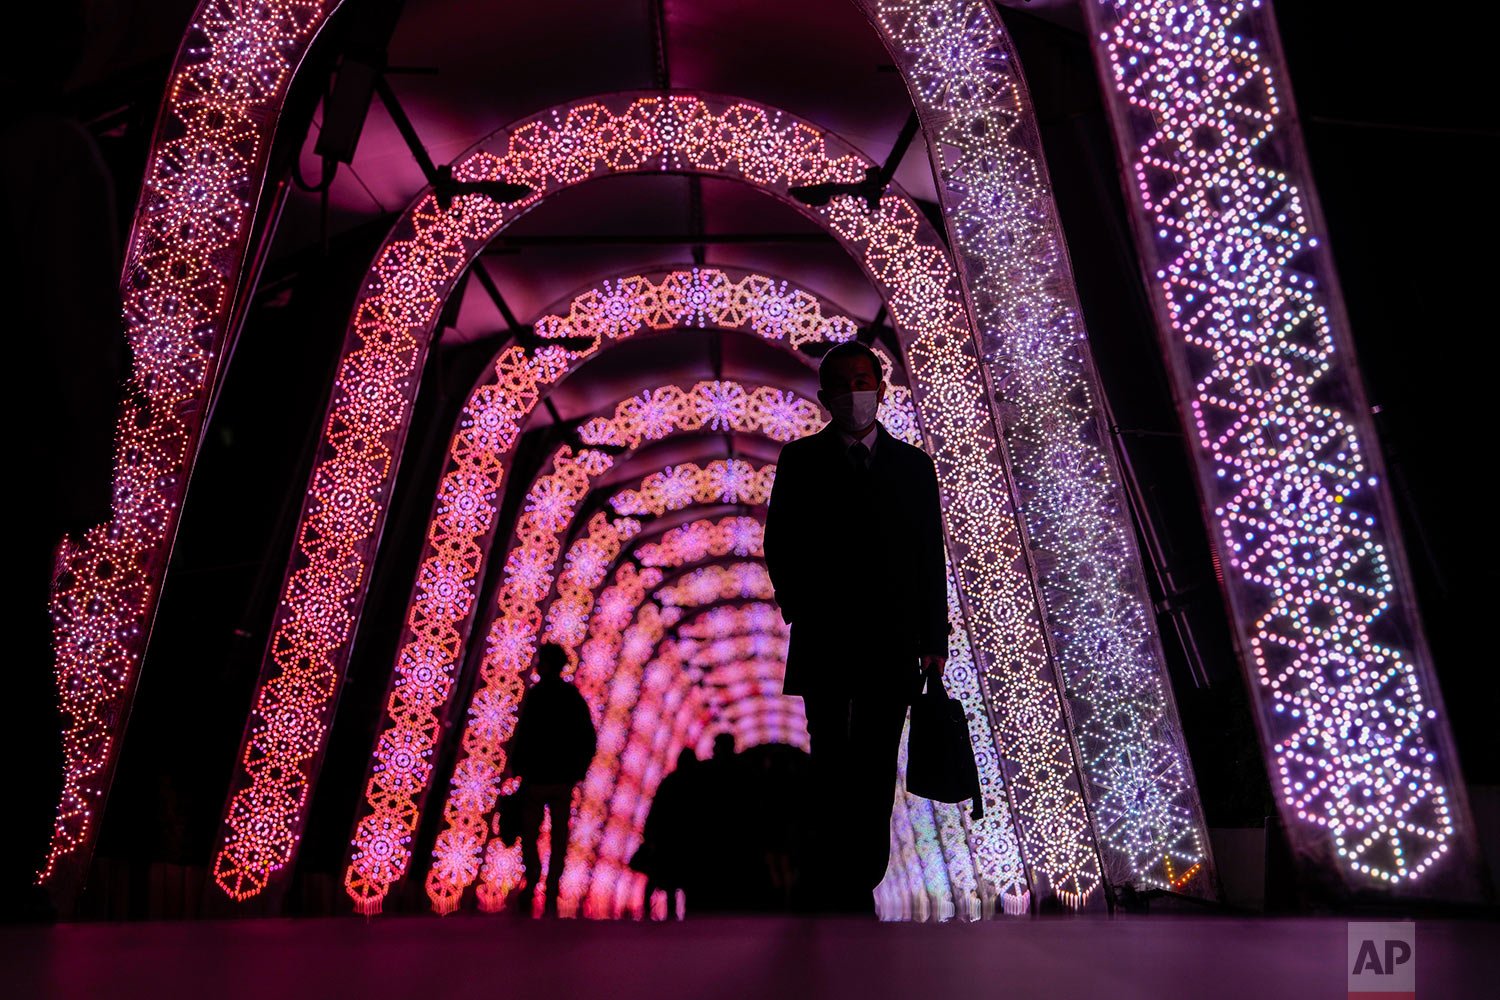  People walk through a tunnel of a holiday light display Thursday, Dec. 9, 2021, in Tokyo. (AP Photo/Kiichiro Sato) 